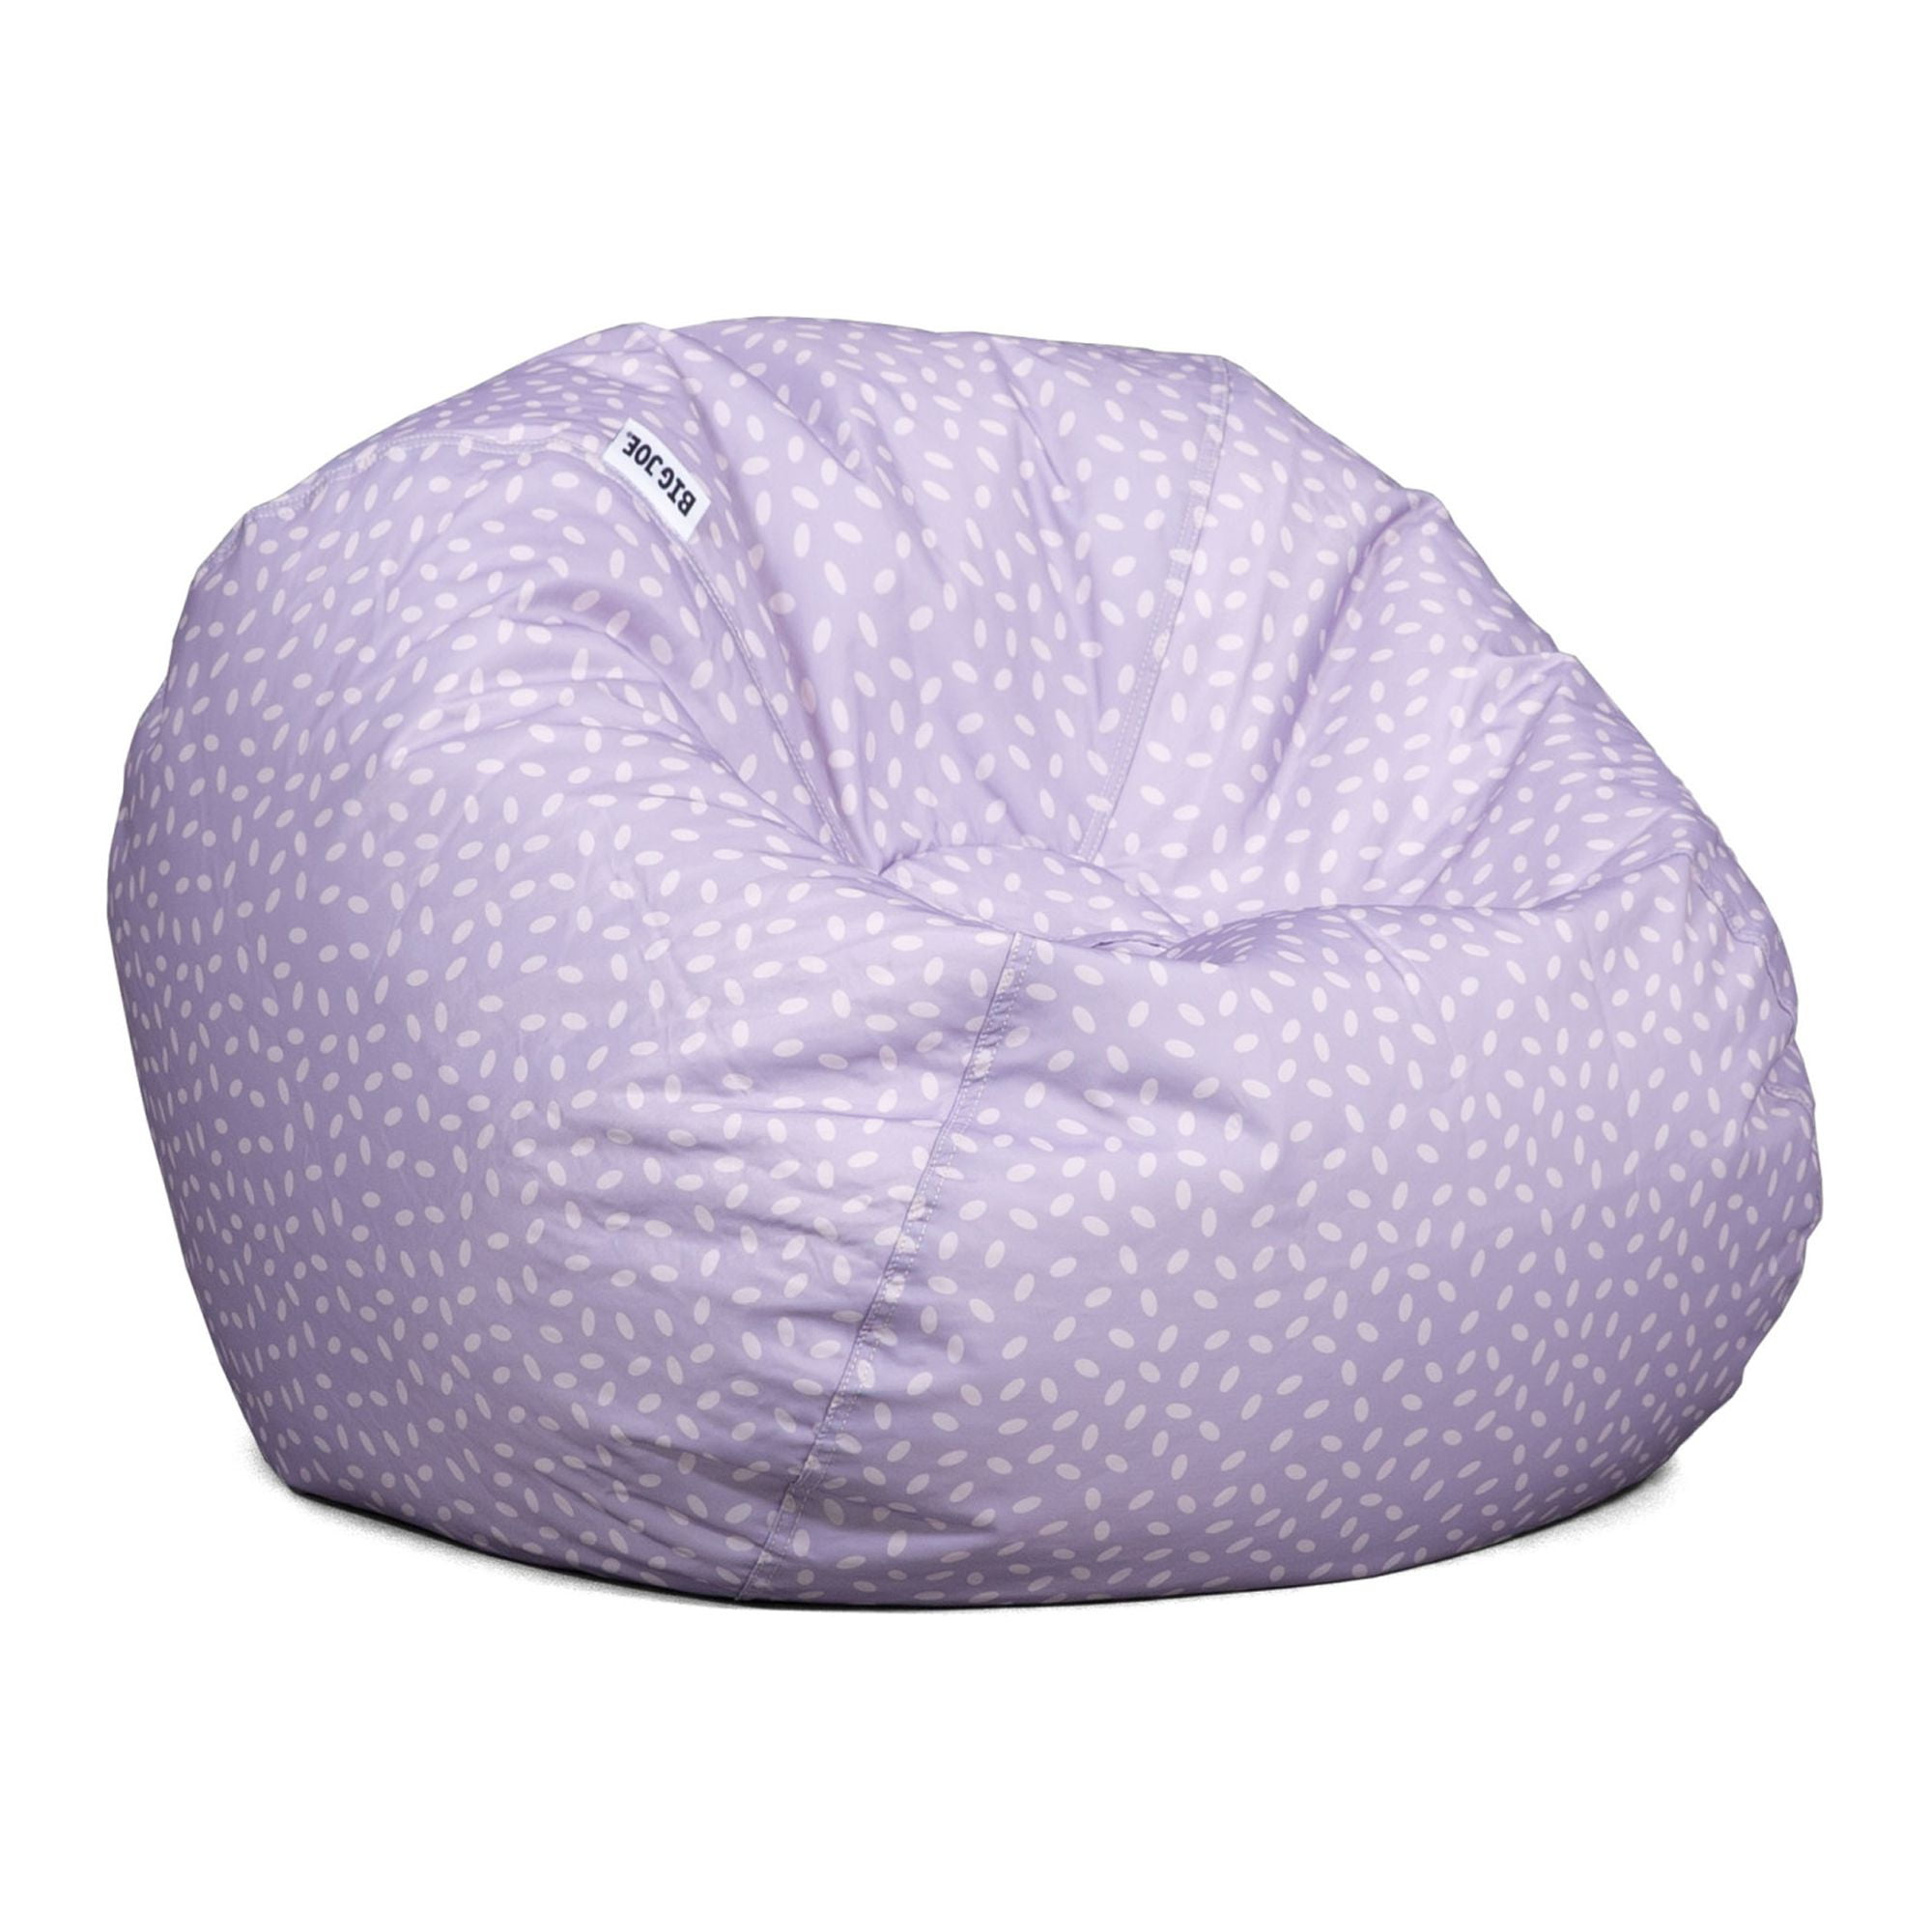 Nimbus Bean Bag Chair & Lounger, Foam Bag Fill:, CAL TB 116 Compliant: Yes  